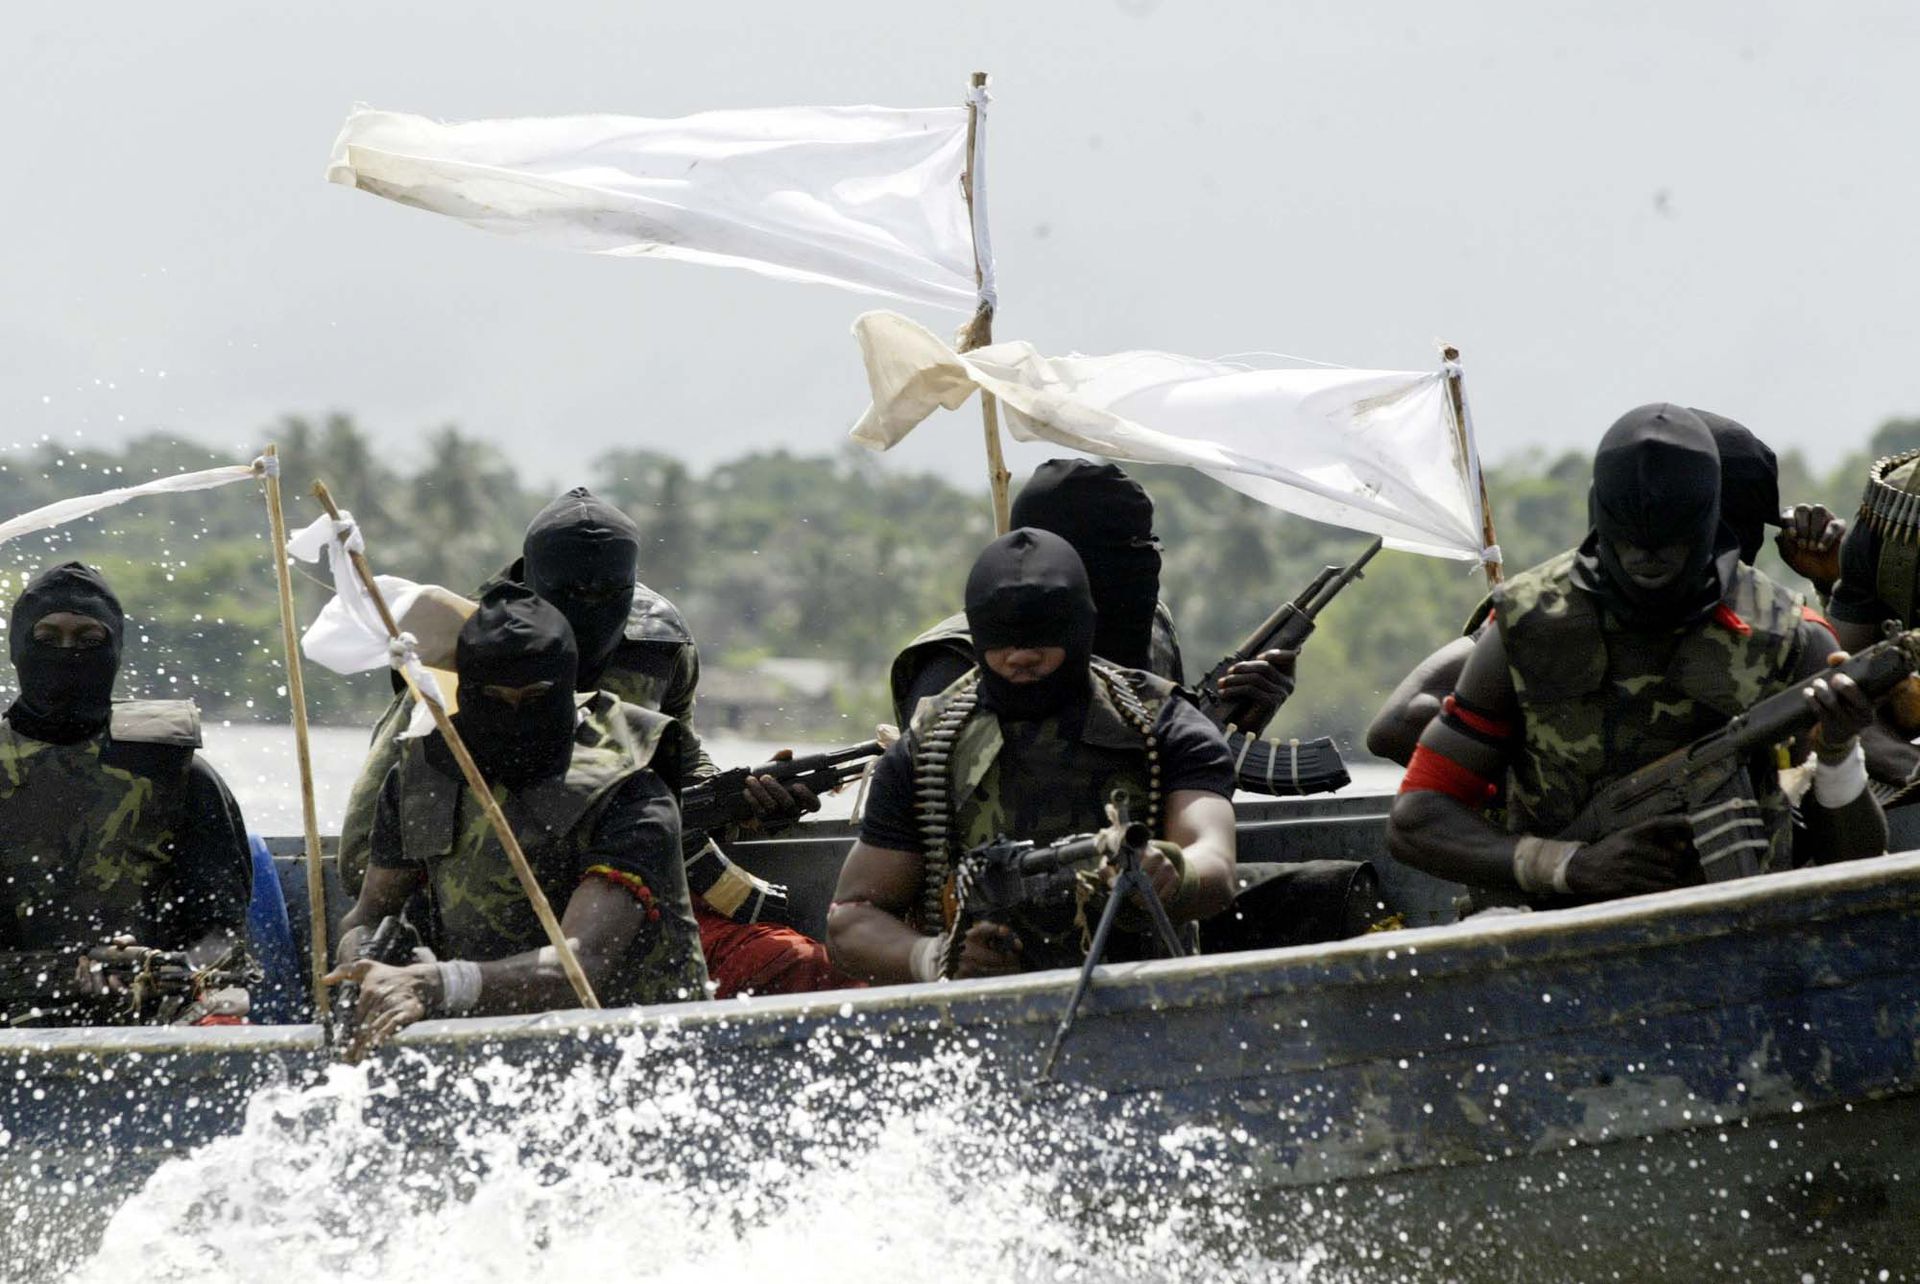 Нападение на судно. Сомалийские пираты 2008. Нападение сомалийских пиратов. Нигерийские пираты. Пираты современности.